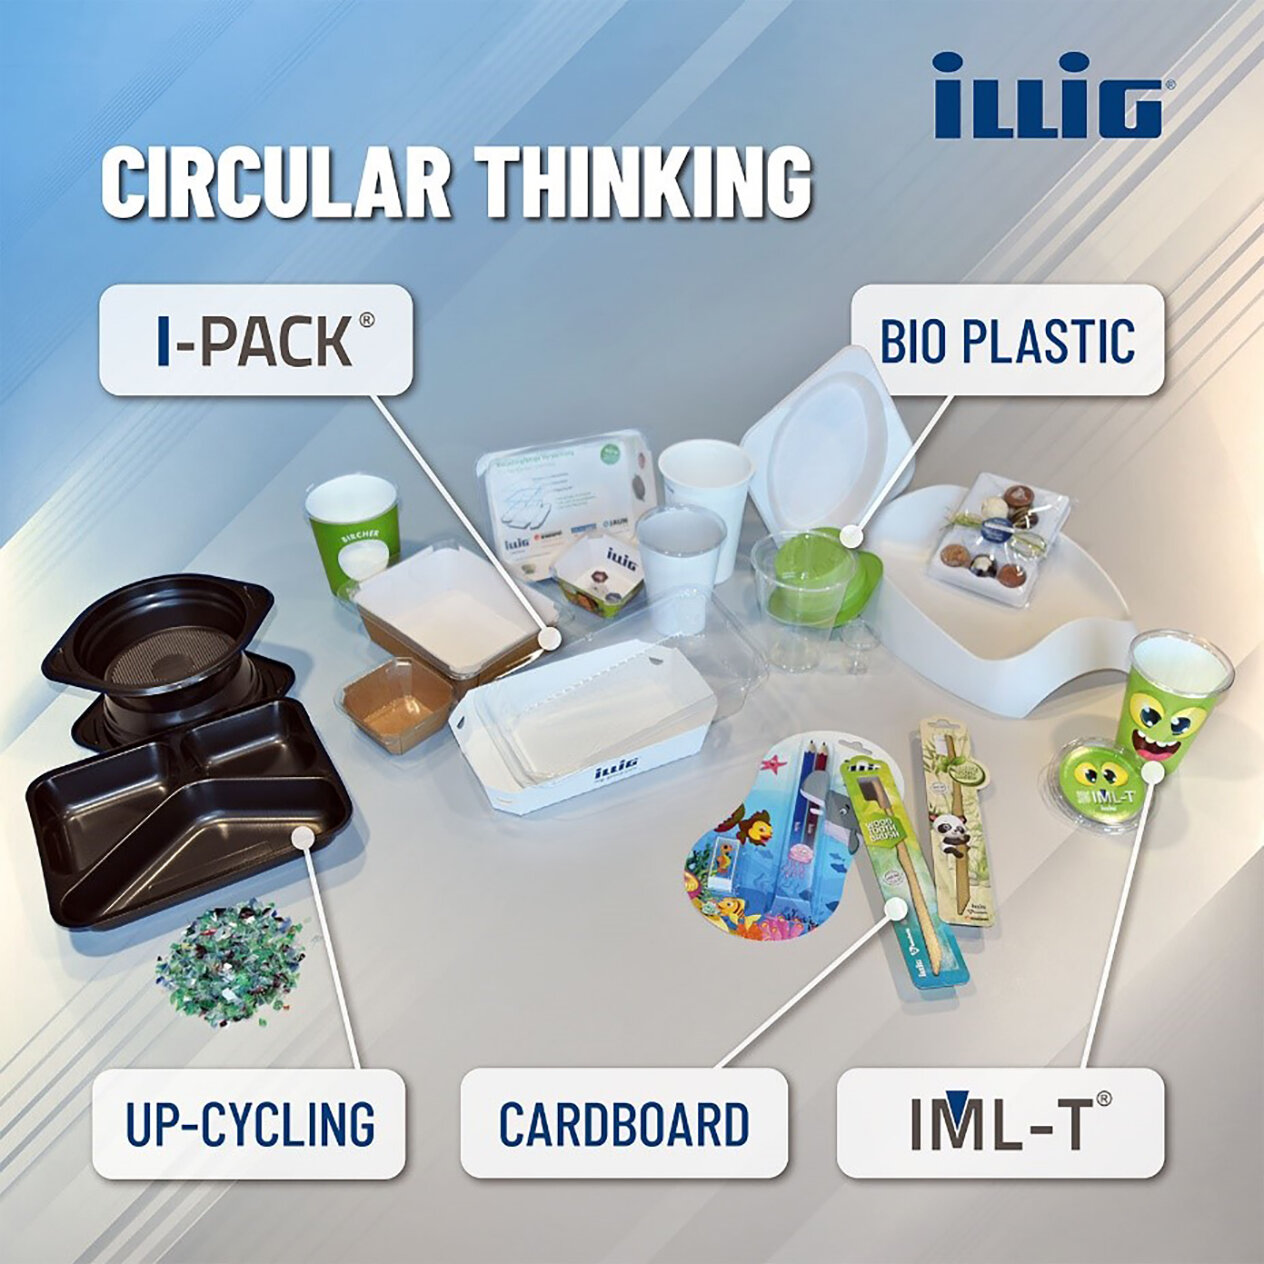 Circular Thinking Solutions by ILLIG | © ILLIG Maschinenbau GmbH & Co. KG